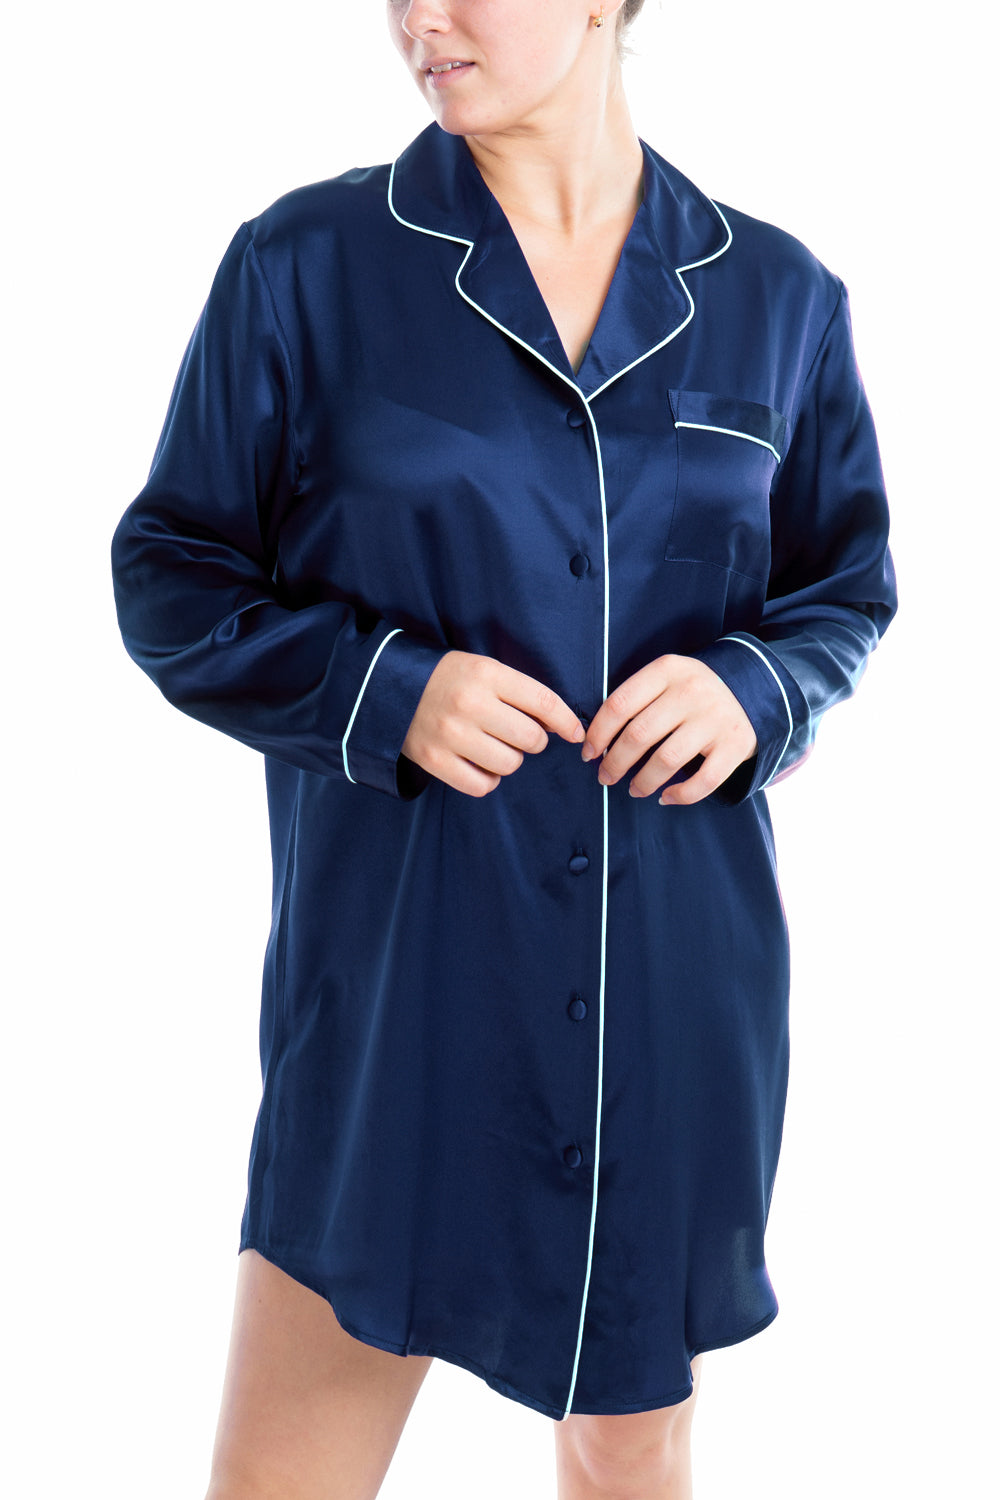 Women's Silk Sleepwear 100% Silk Sleepshirt -OSCAR ROSSA